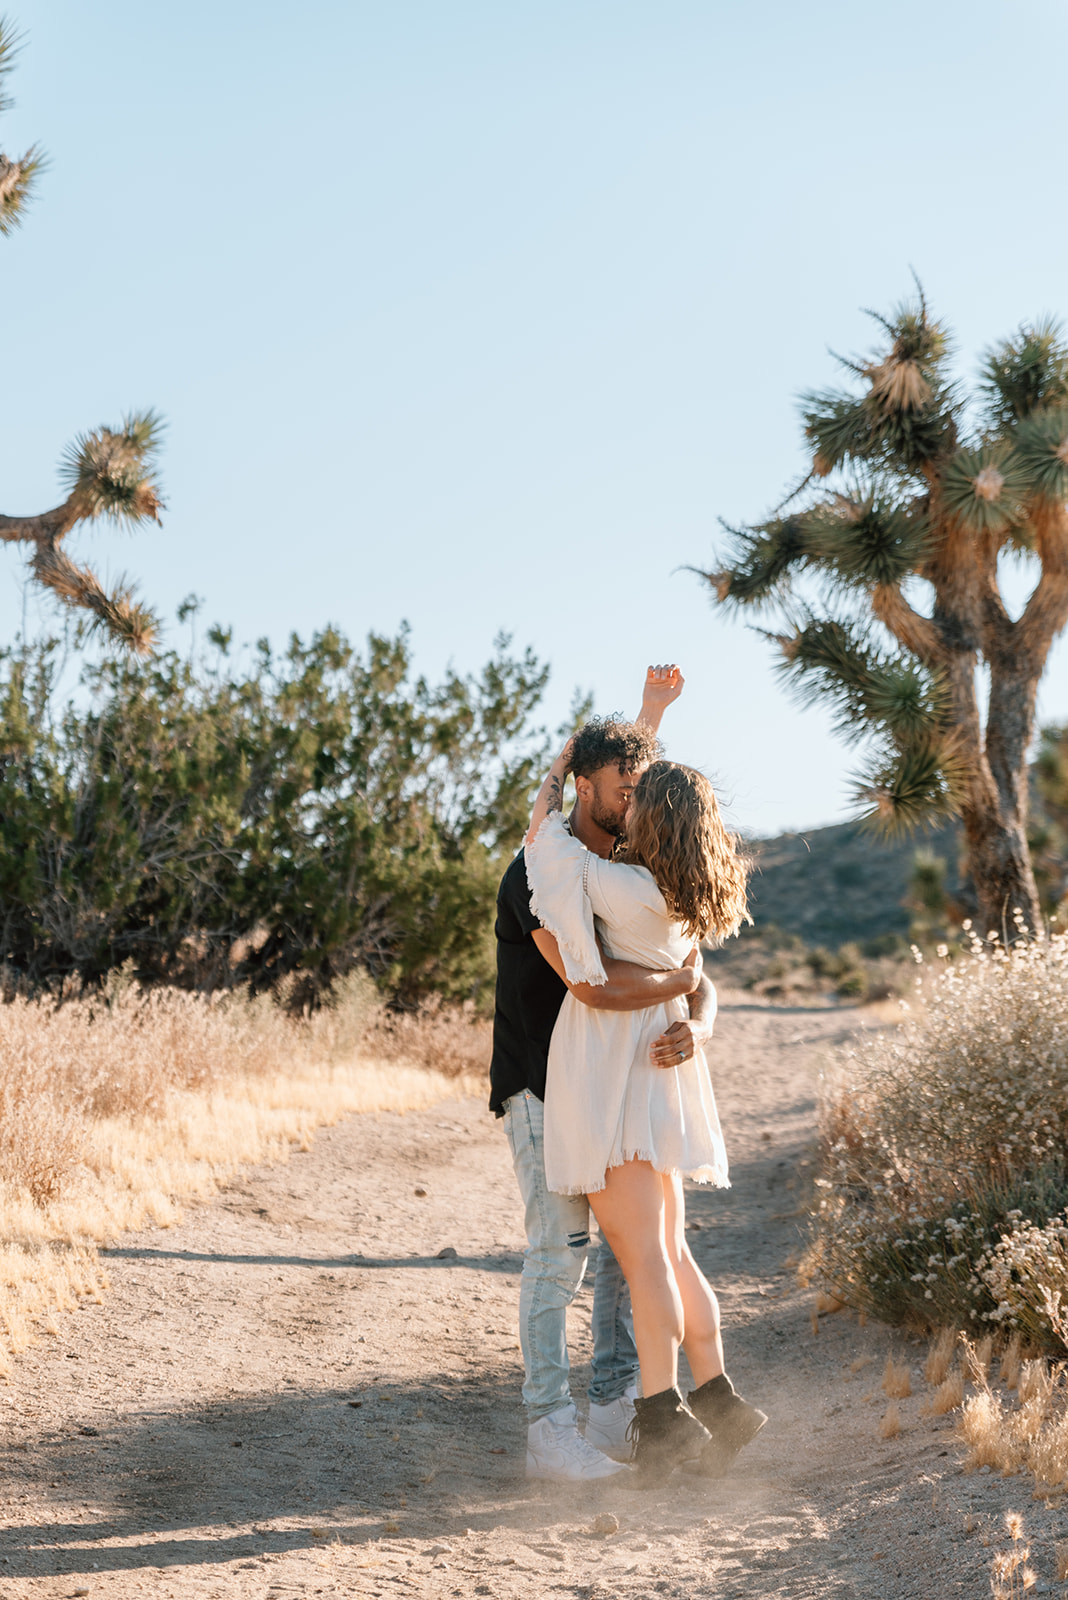 Fiances sneak a kiss on a desert path in Palm Springs California